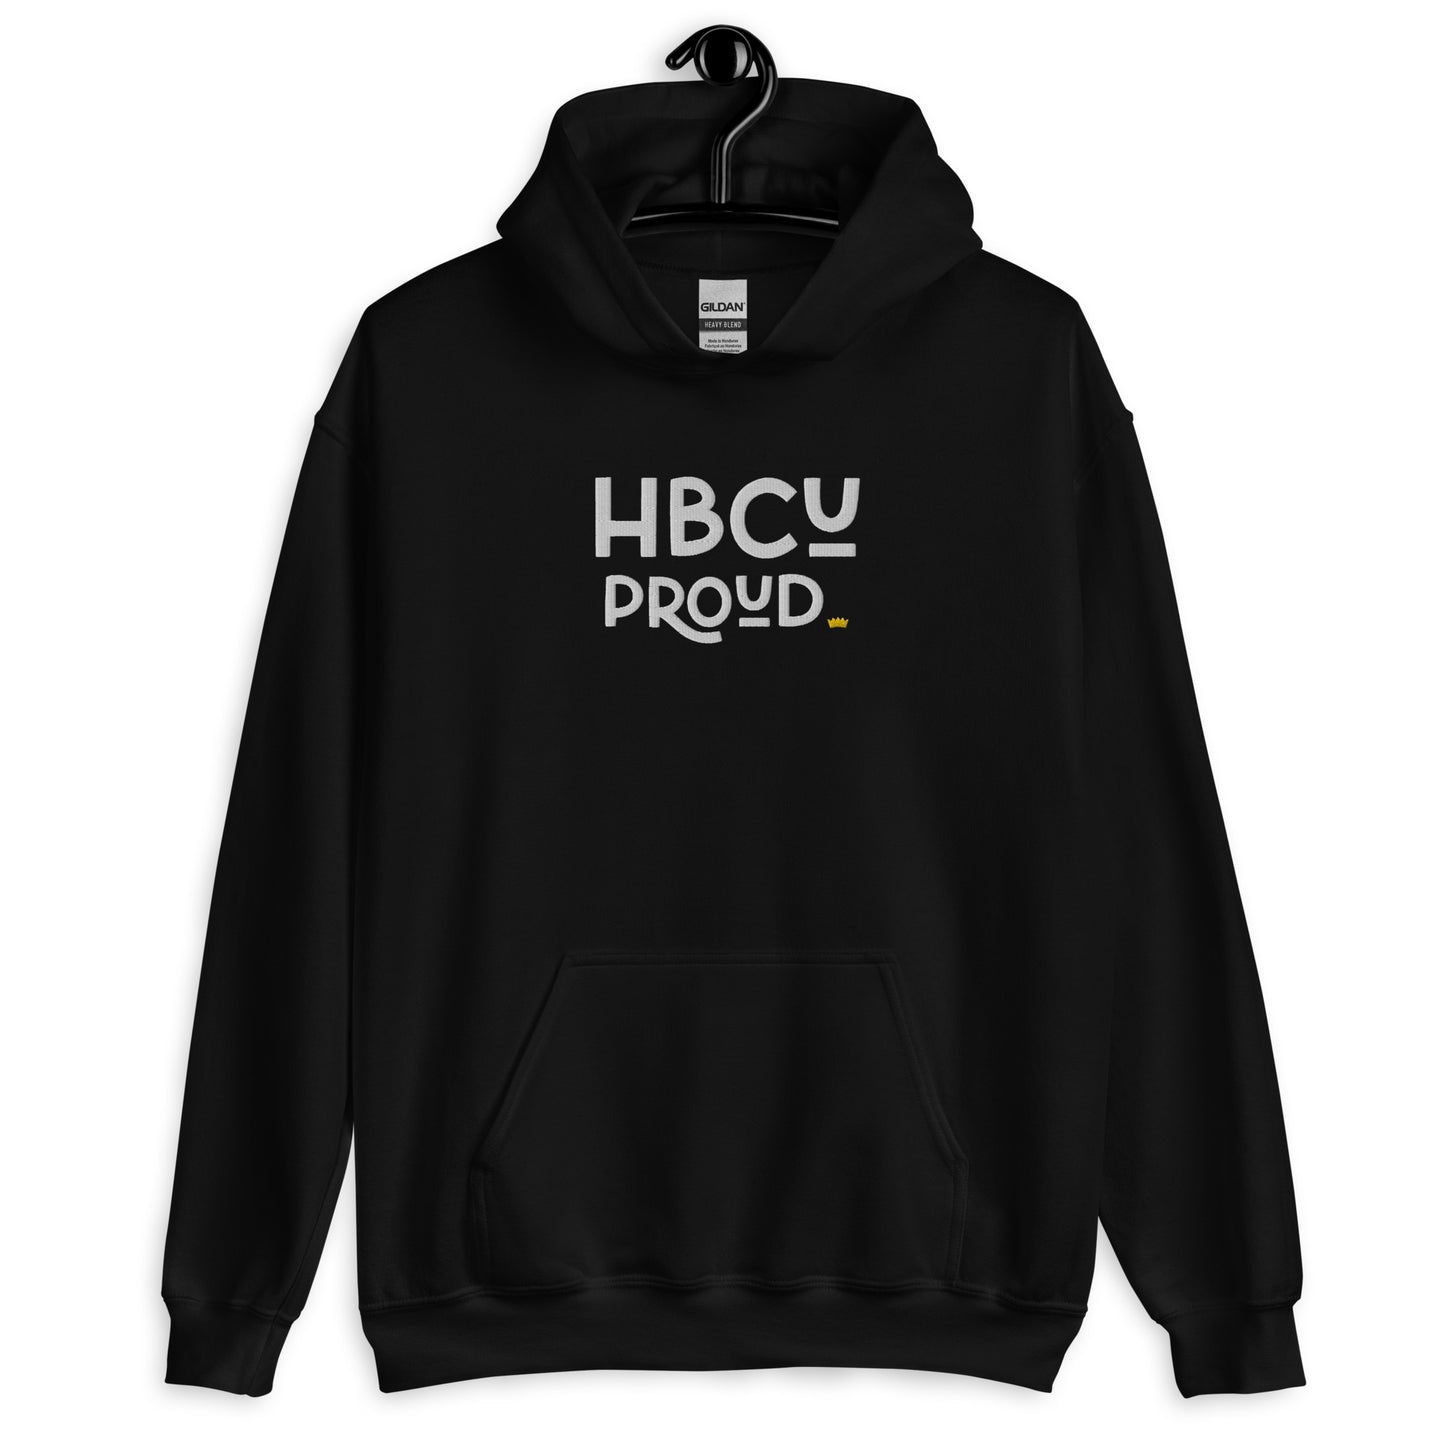 Proud - HBCU Embroidered Unisex Hoodie